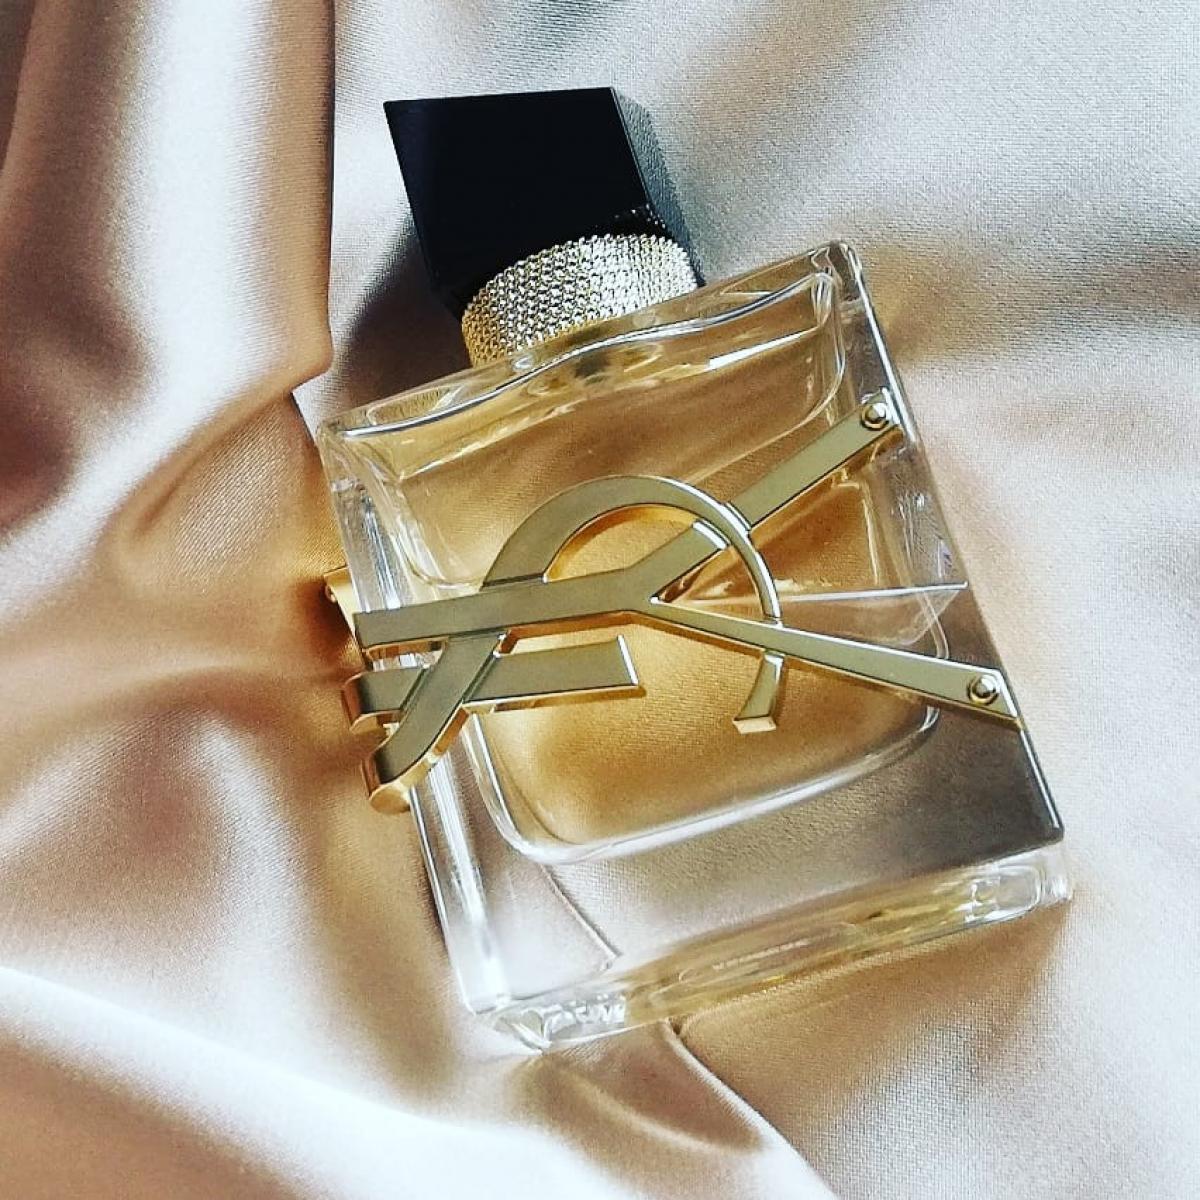 Libre Yves Saint Laurent perfume - a new fragrance for women 2019